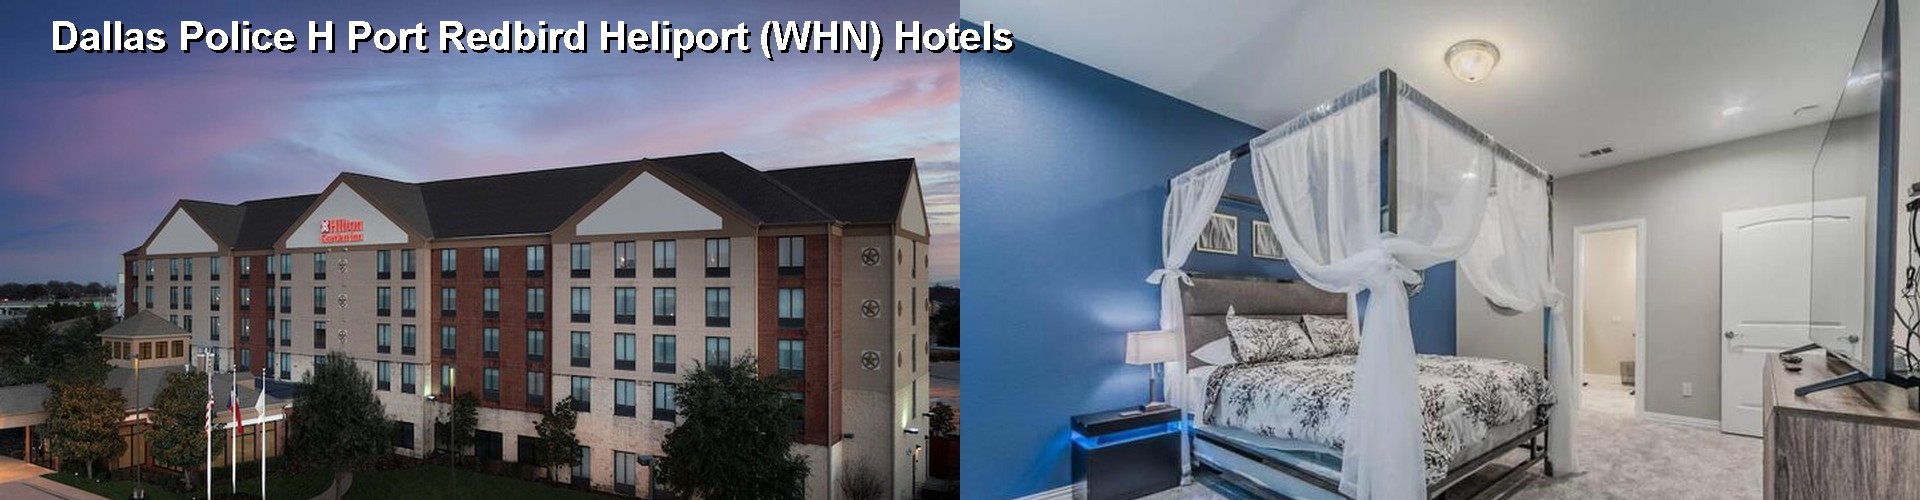 3 Best Hotels near Dallas Police H Port Redbird Heliport (WHN)